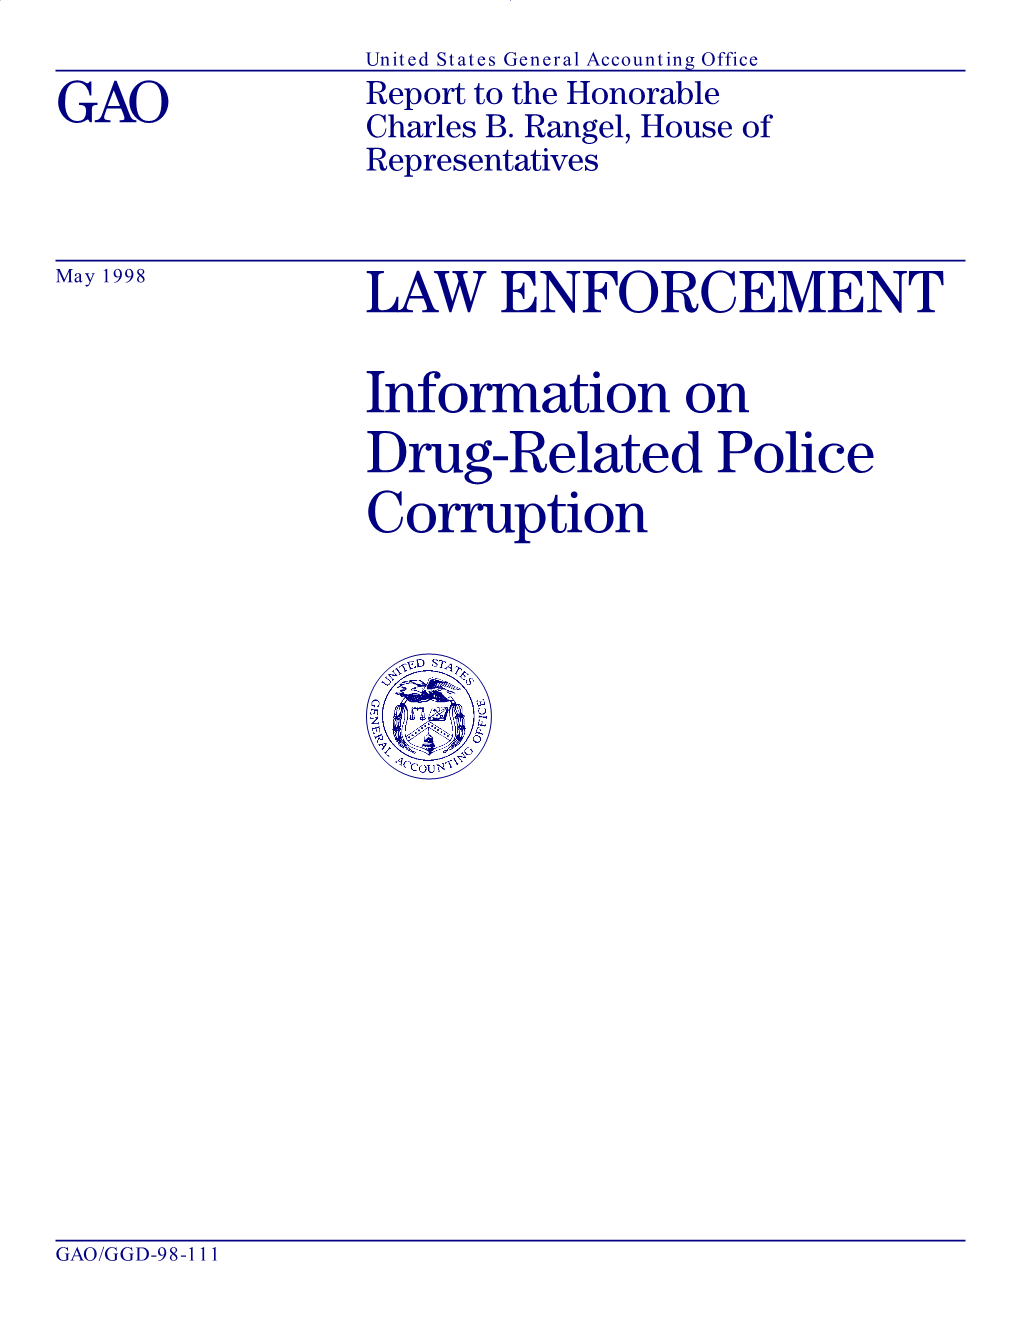 GGD-98-111 Law Enforcement: Information on Drug-Related Police